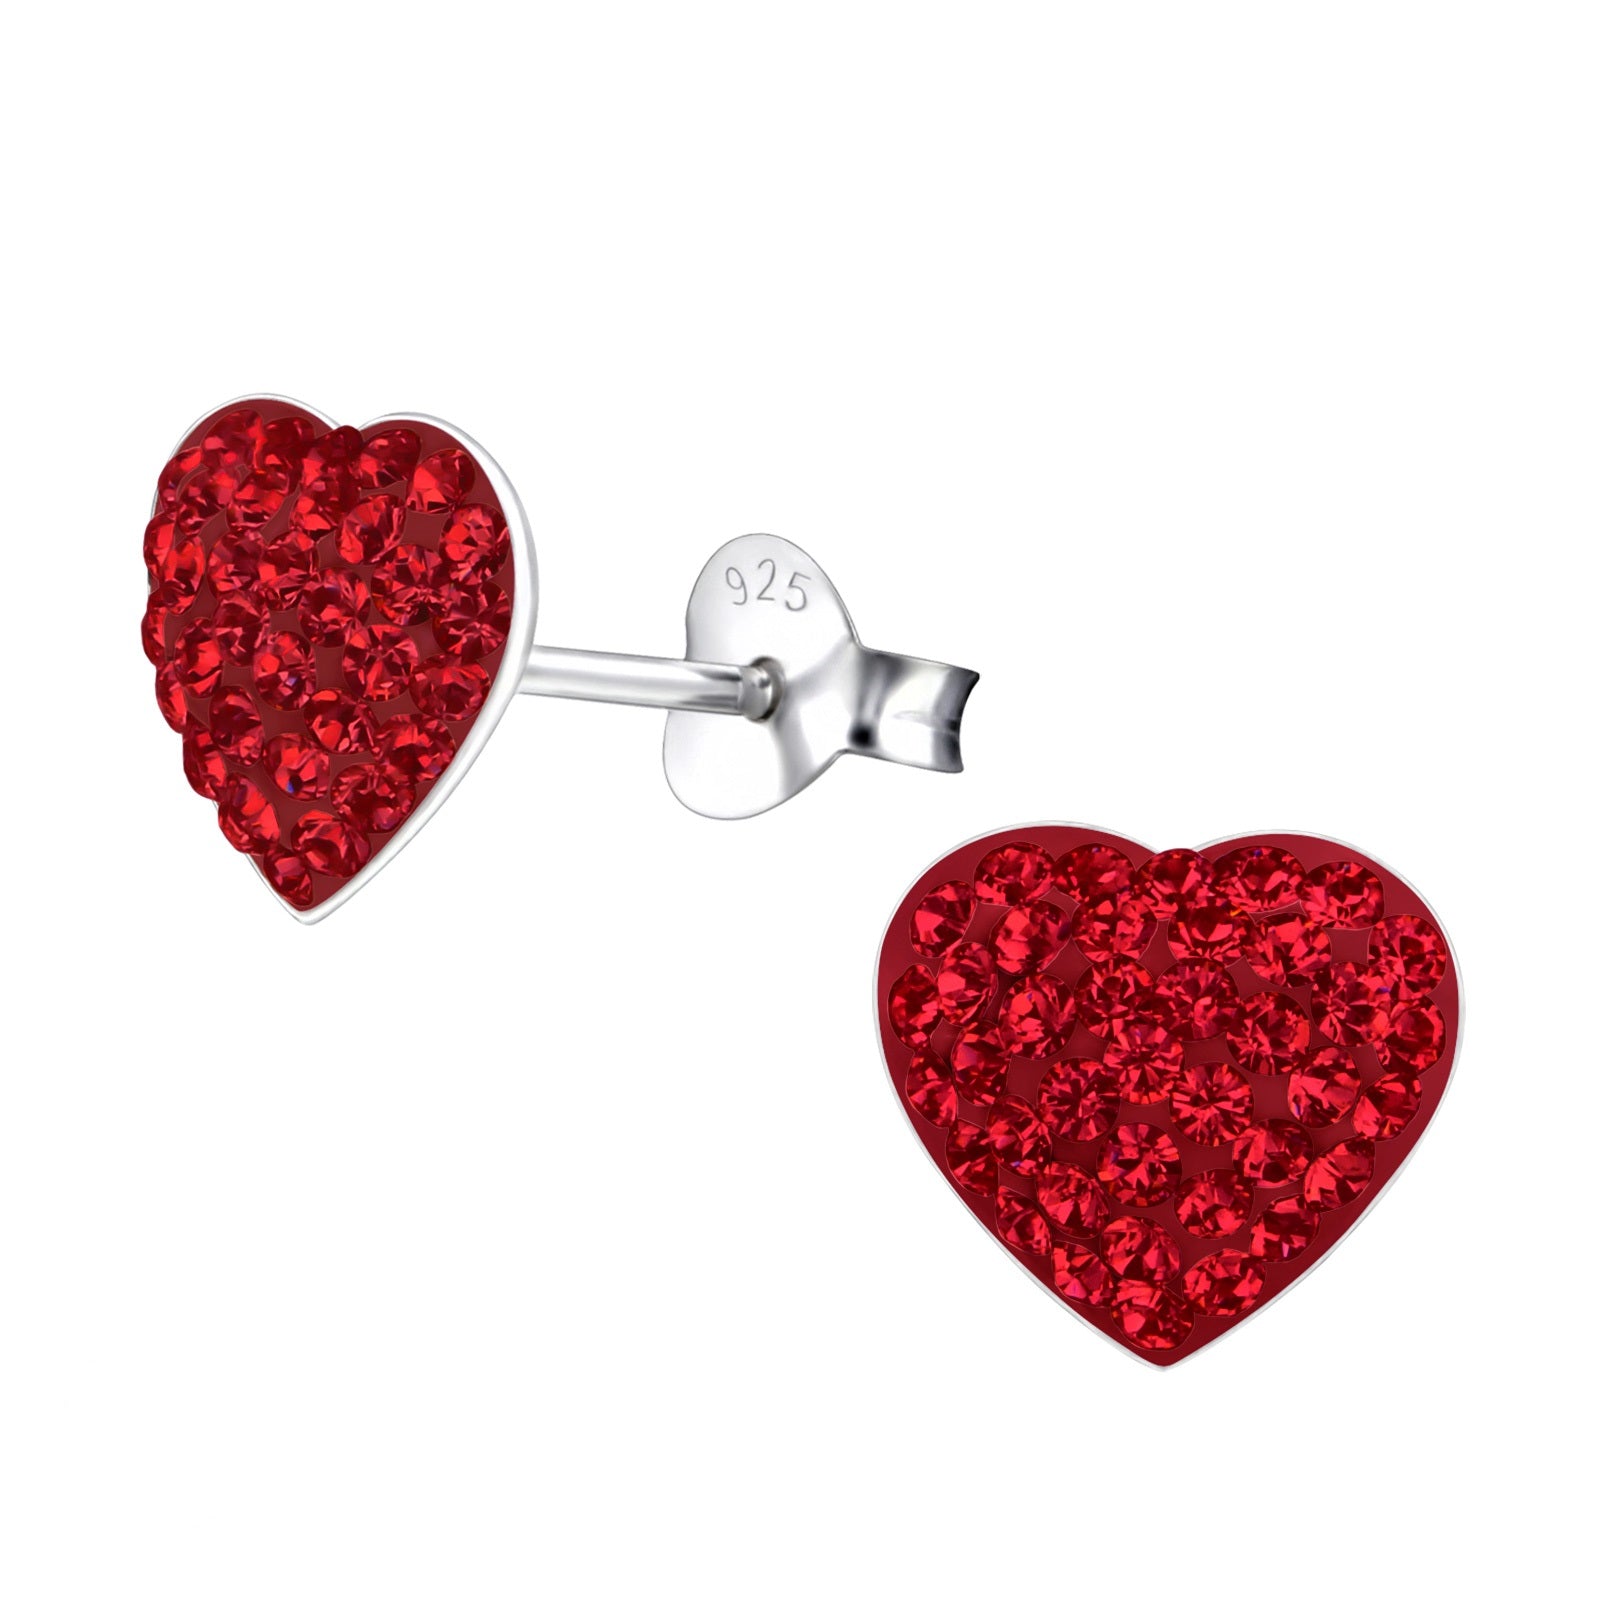 Swarovski Heart Shaped Earrings Buy Now Sale 56 OFF  wwwramkrishnacarehospitalscom